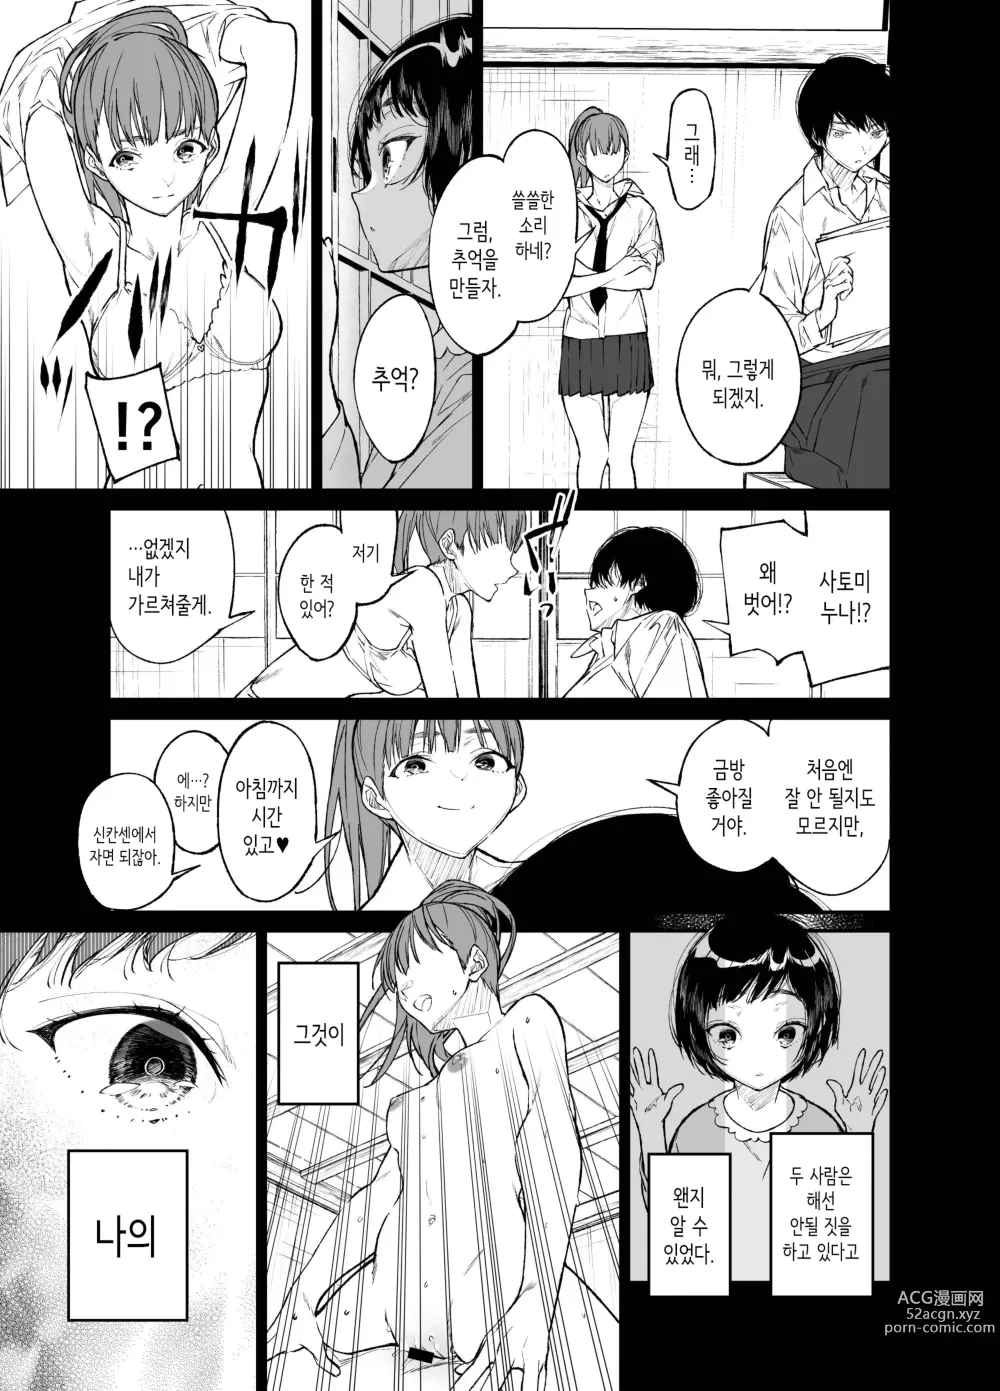 Page 13 of doujinshi 여름, 소녀는 불길 속에 뛰어든다.